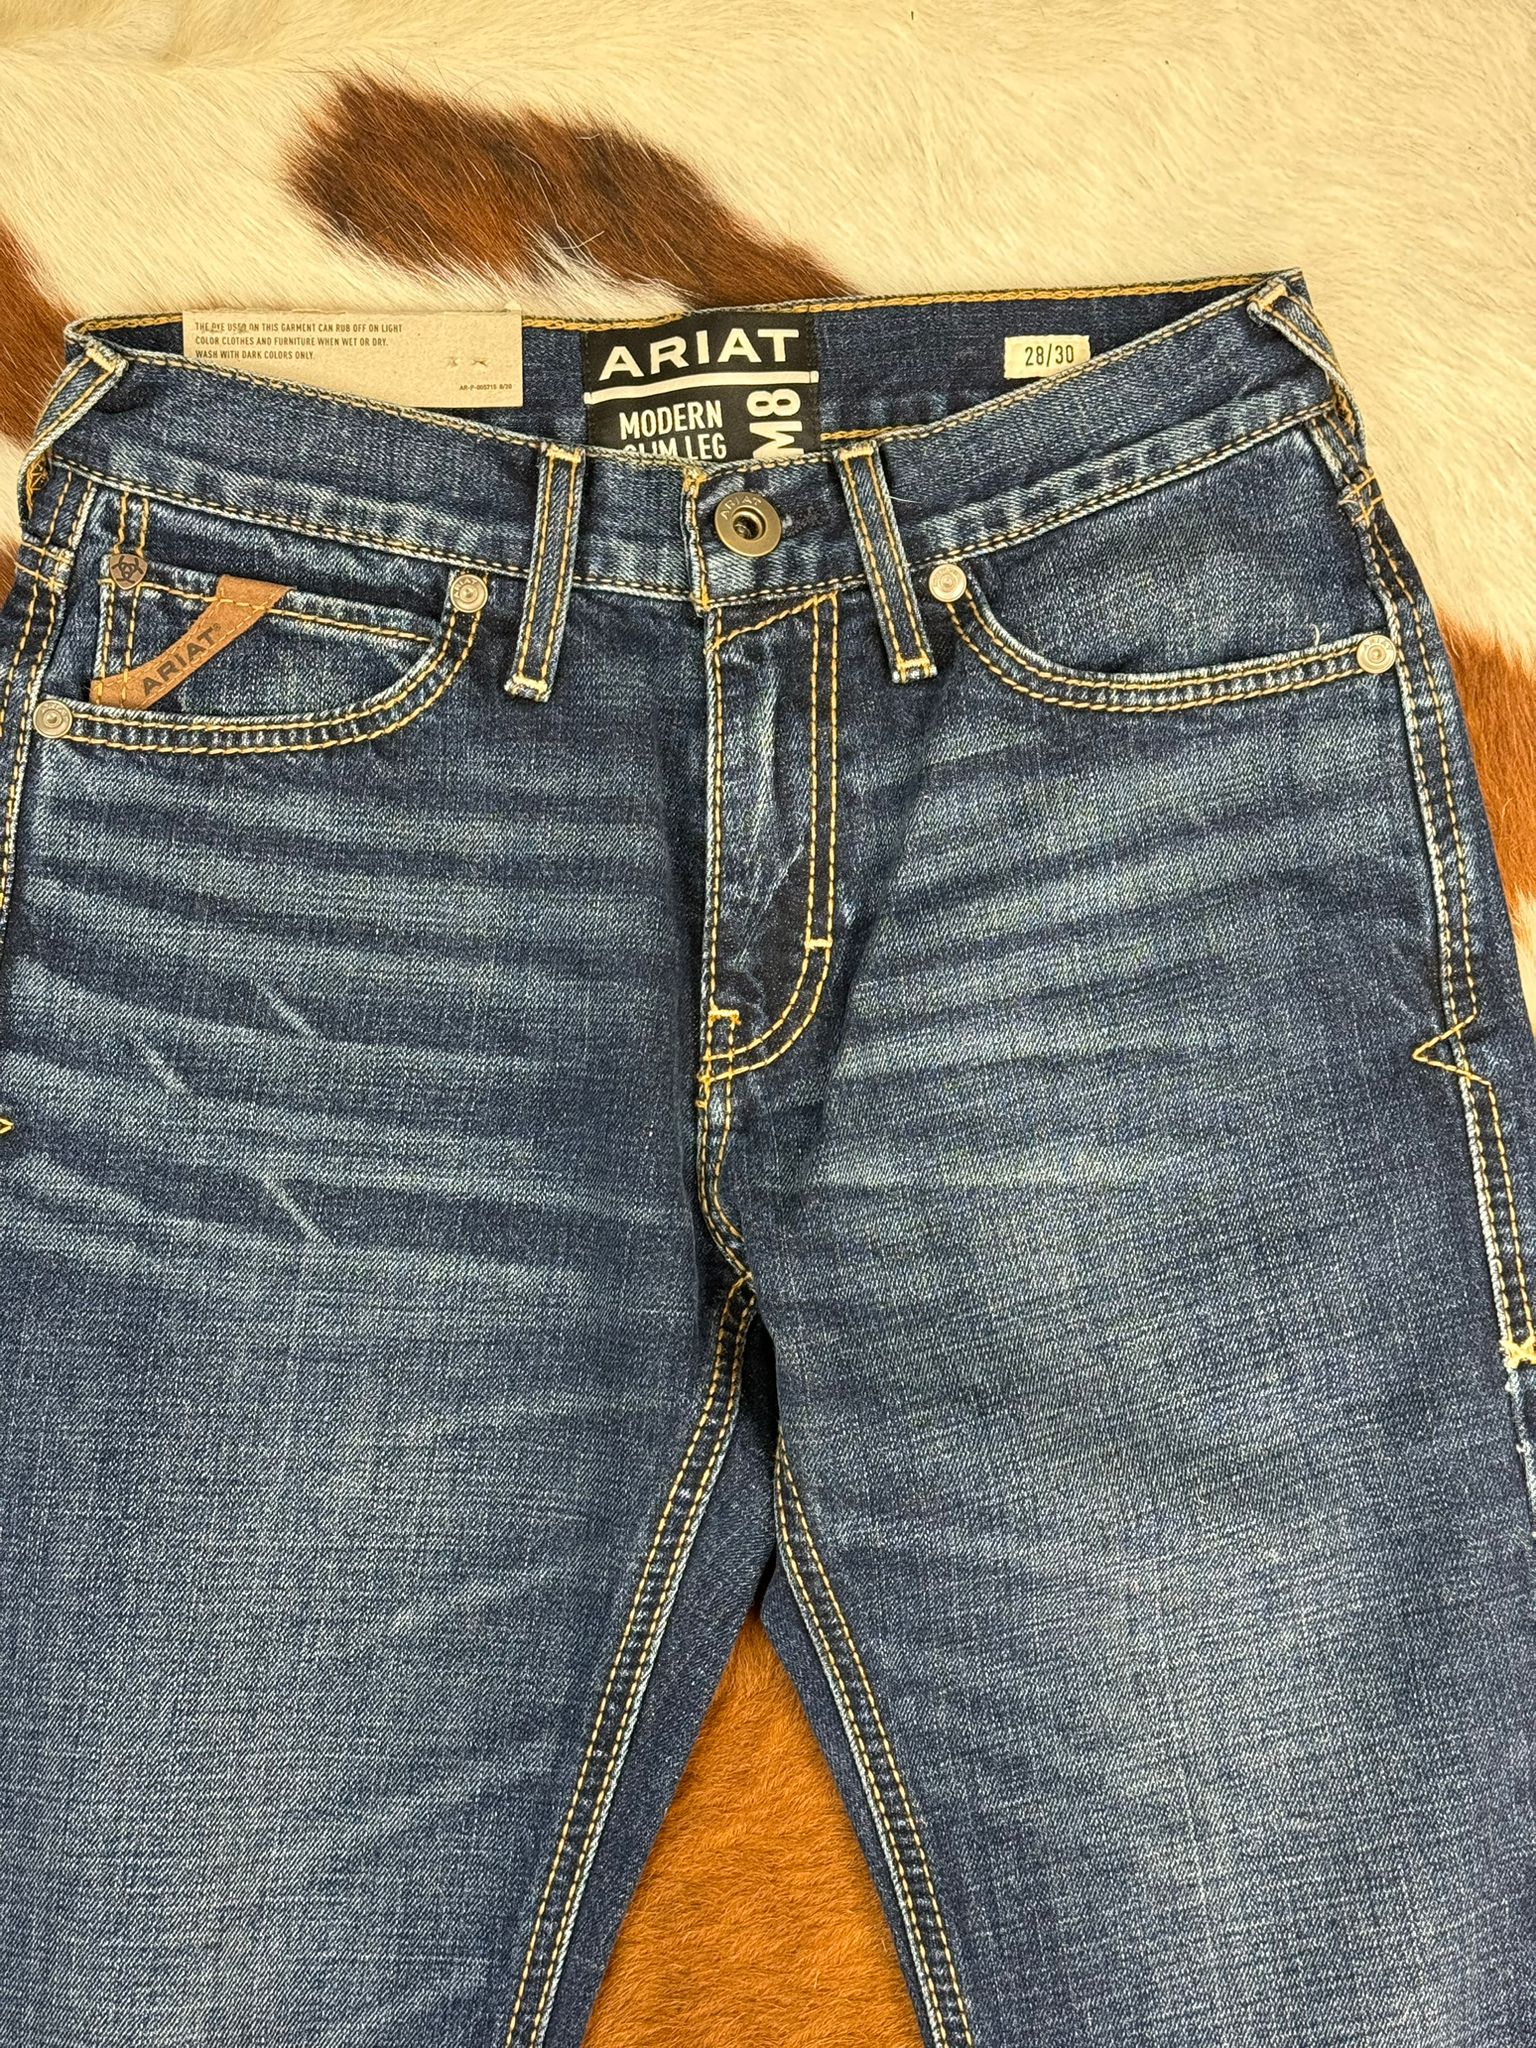 Ariat Mens Jeans Tornado M8 Modern Slim Leg